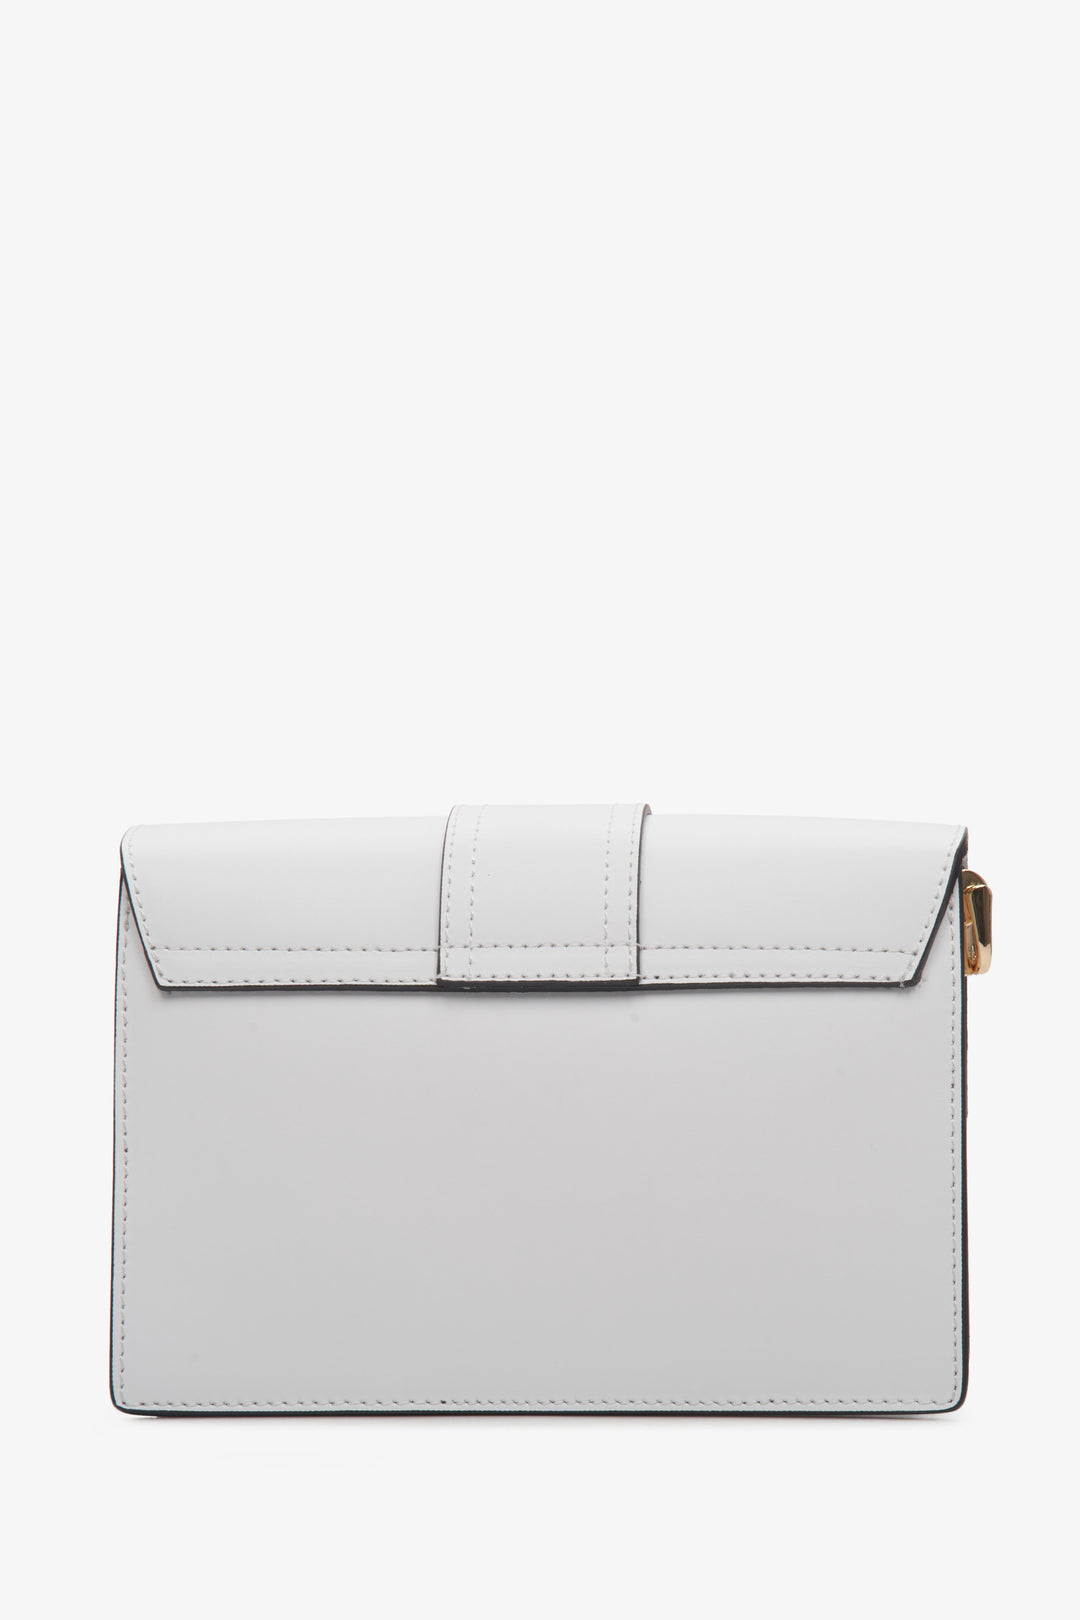 Small, elegant women's white shoulder bag made in Italy - reverse.